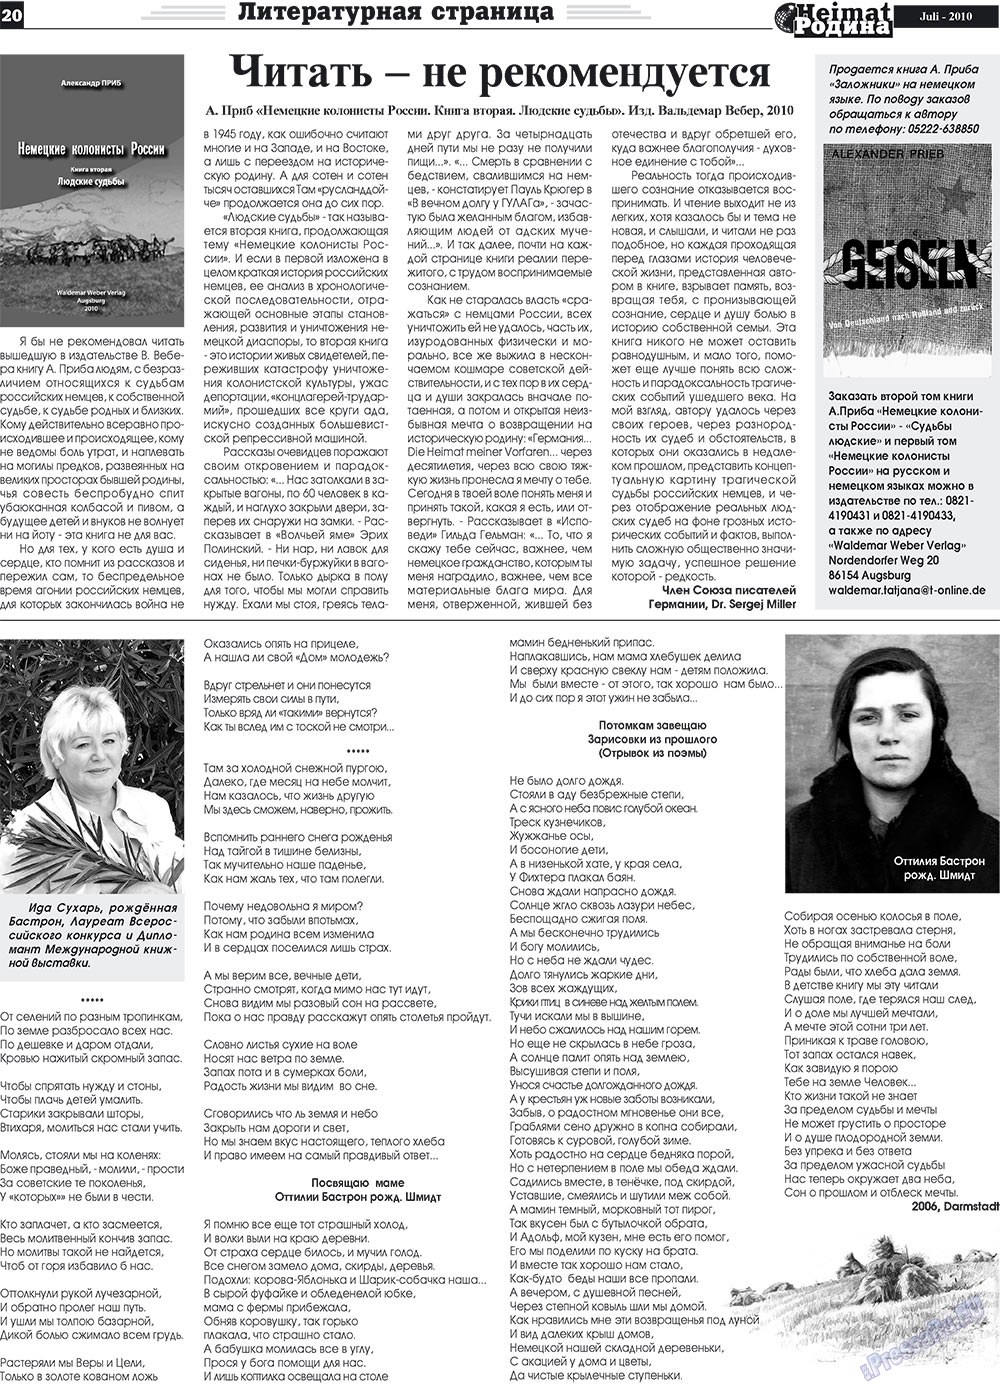 Heimat-Родина, газета. 2010 №7 стр.20